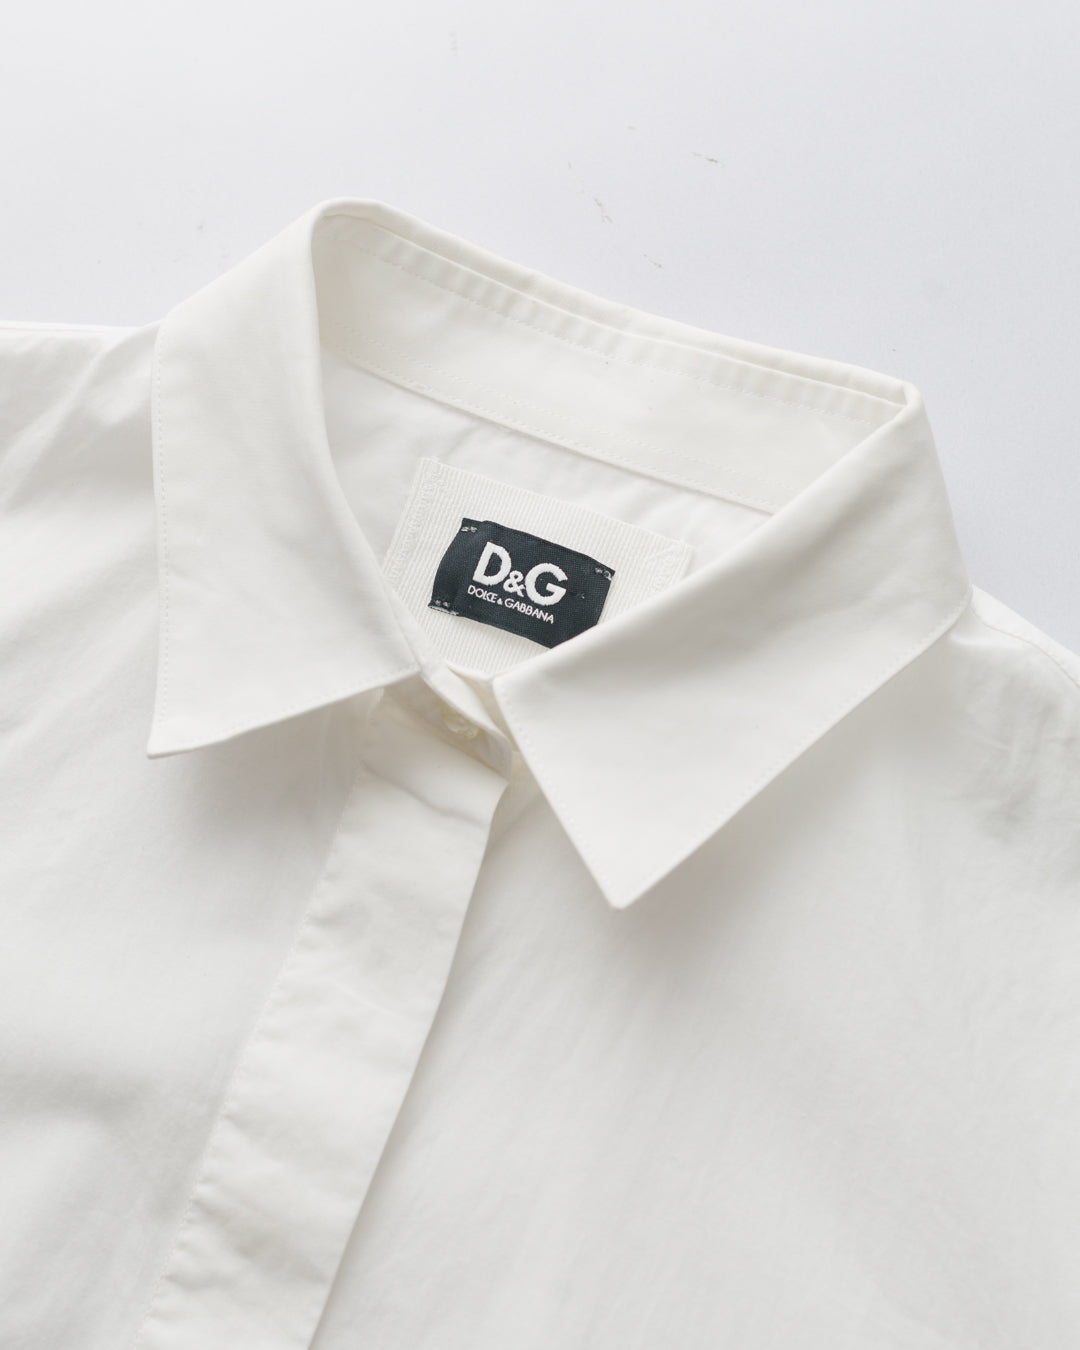 Dolce & Gabbana Embroidered Logo Button Down